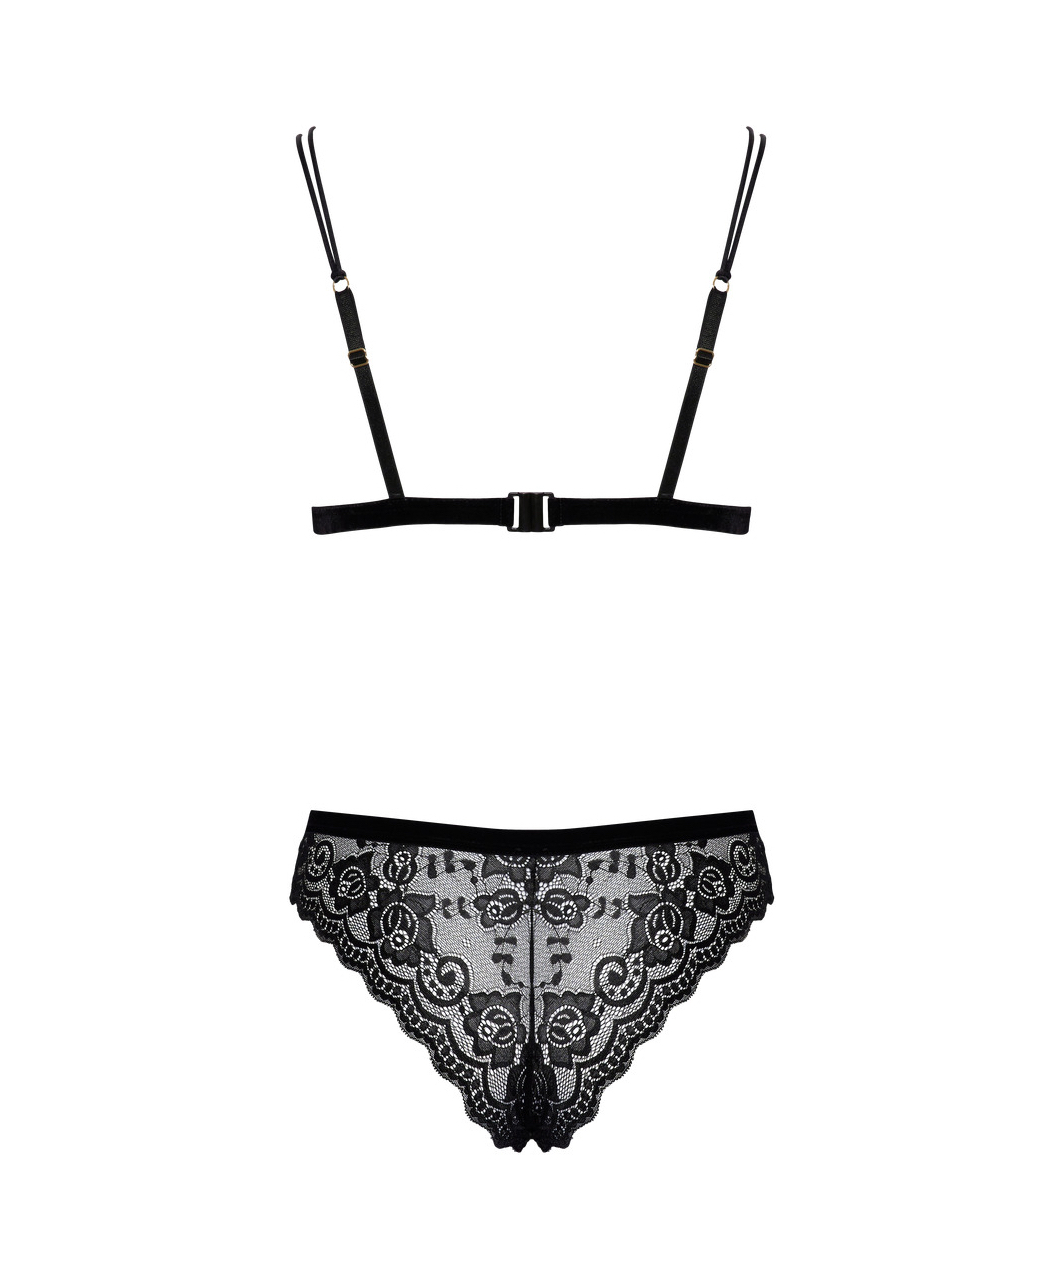 Cottelli Lingerie black lace lingerie set with stimulating pearls